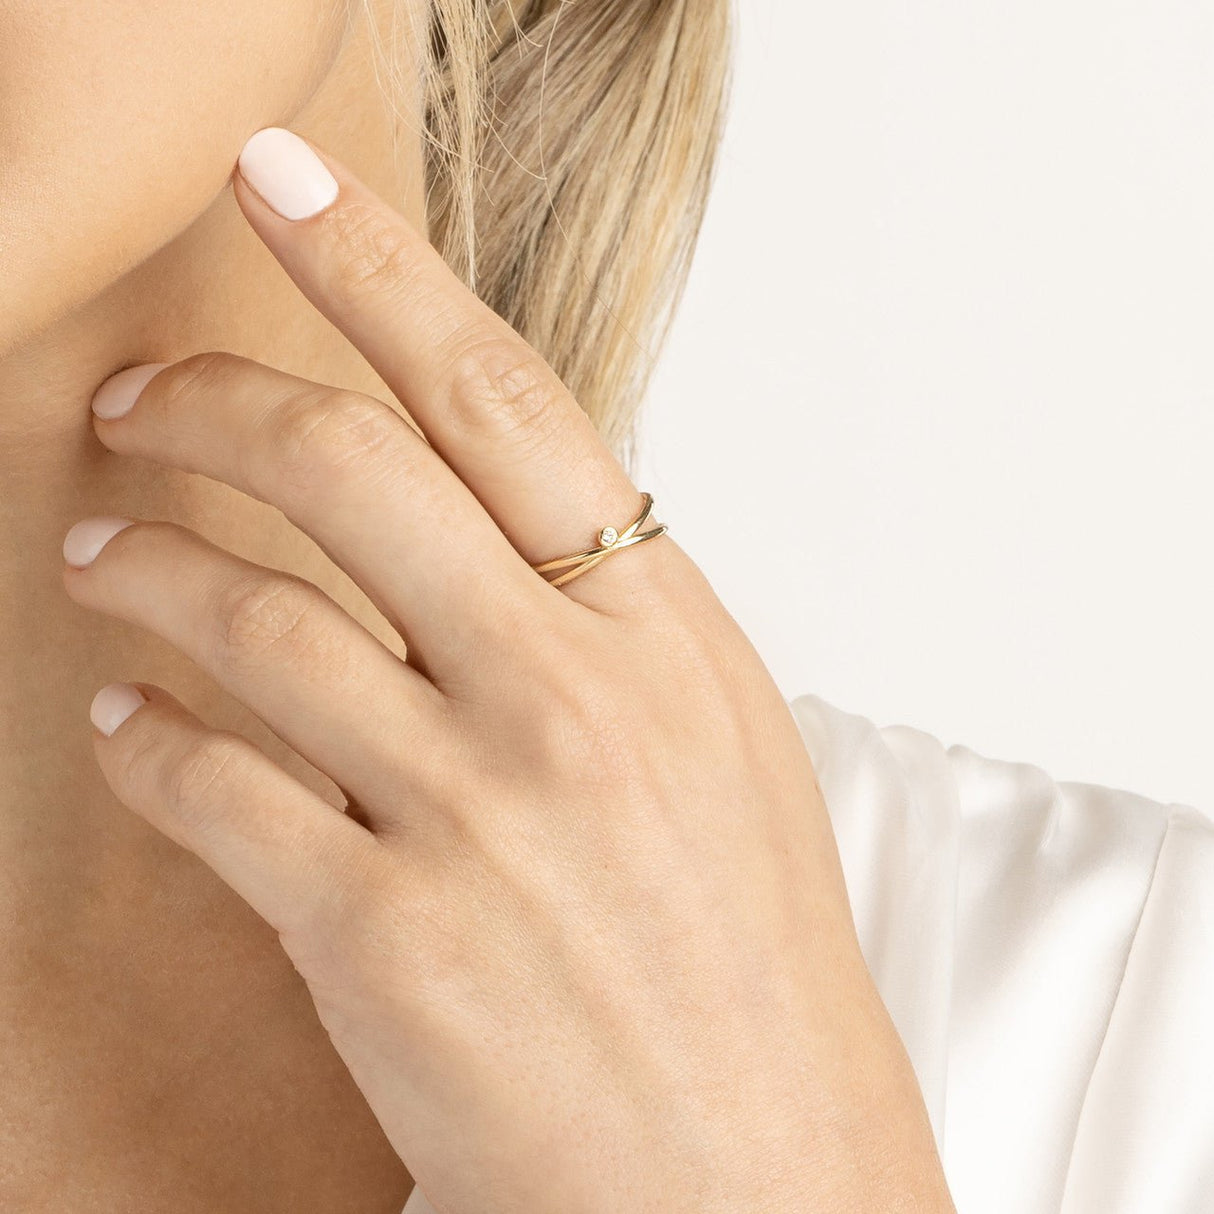 Women's Rings - Designer Gold, Silver Fashion Rings